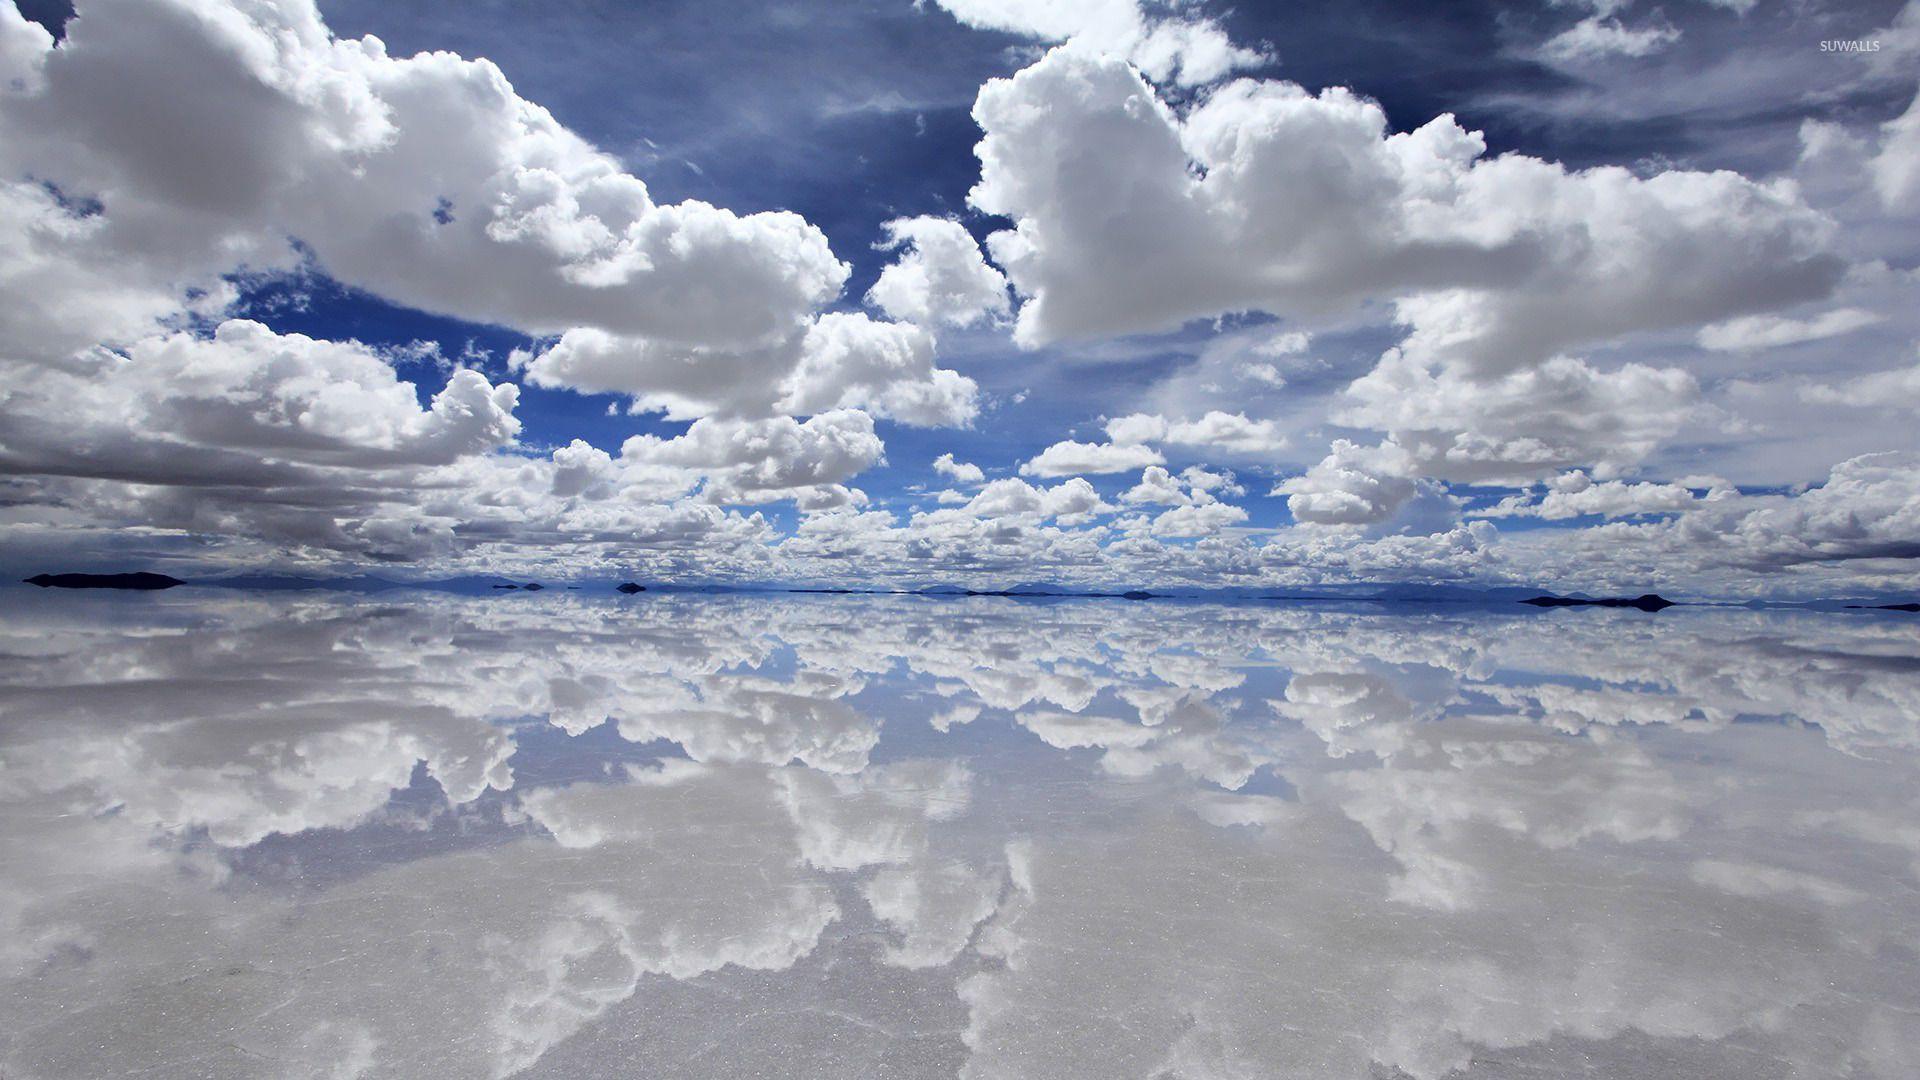 Cloud reflections in water wallpaper wallpaper